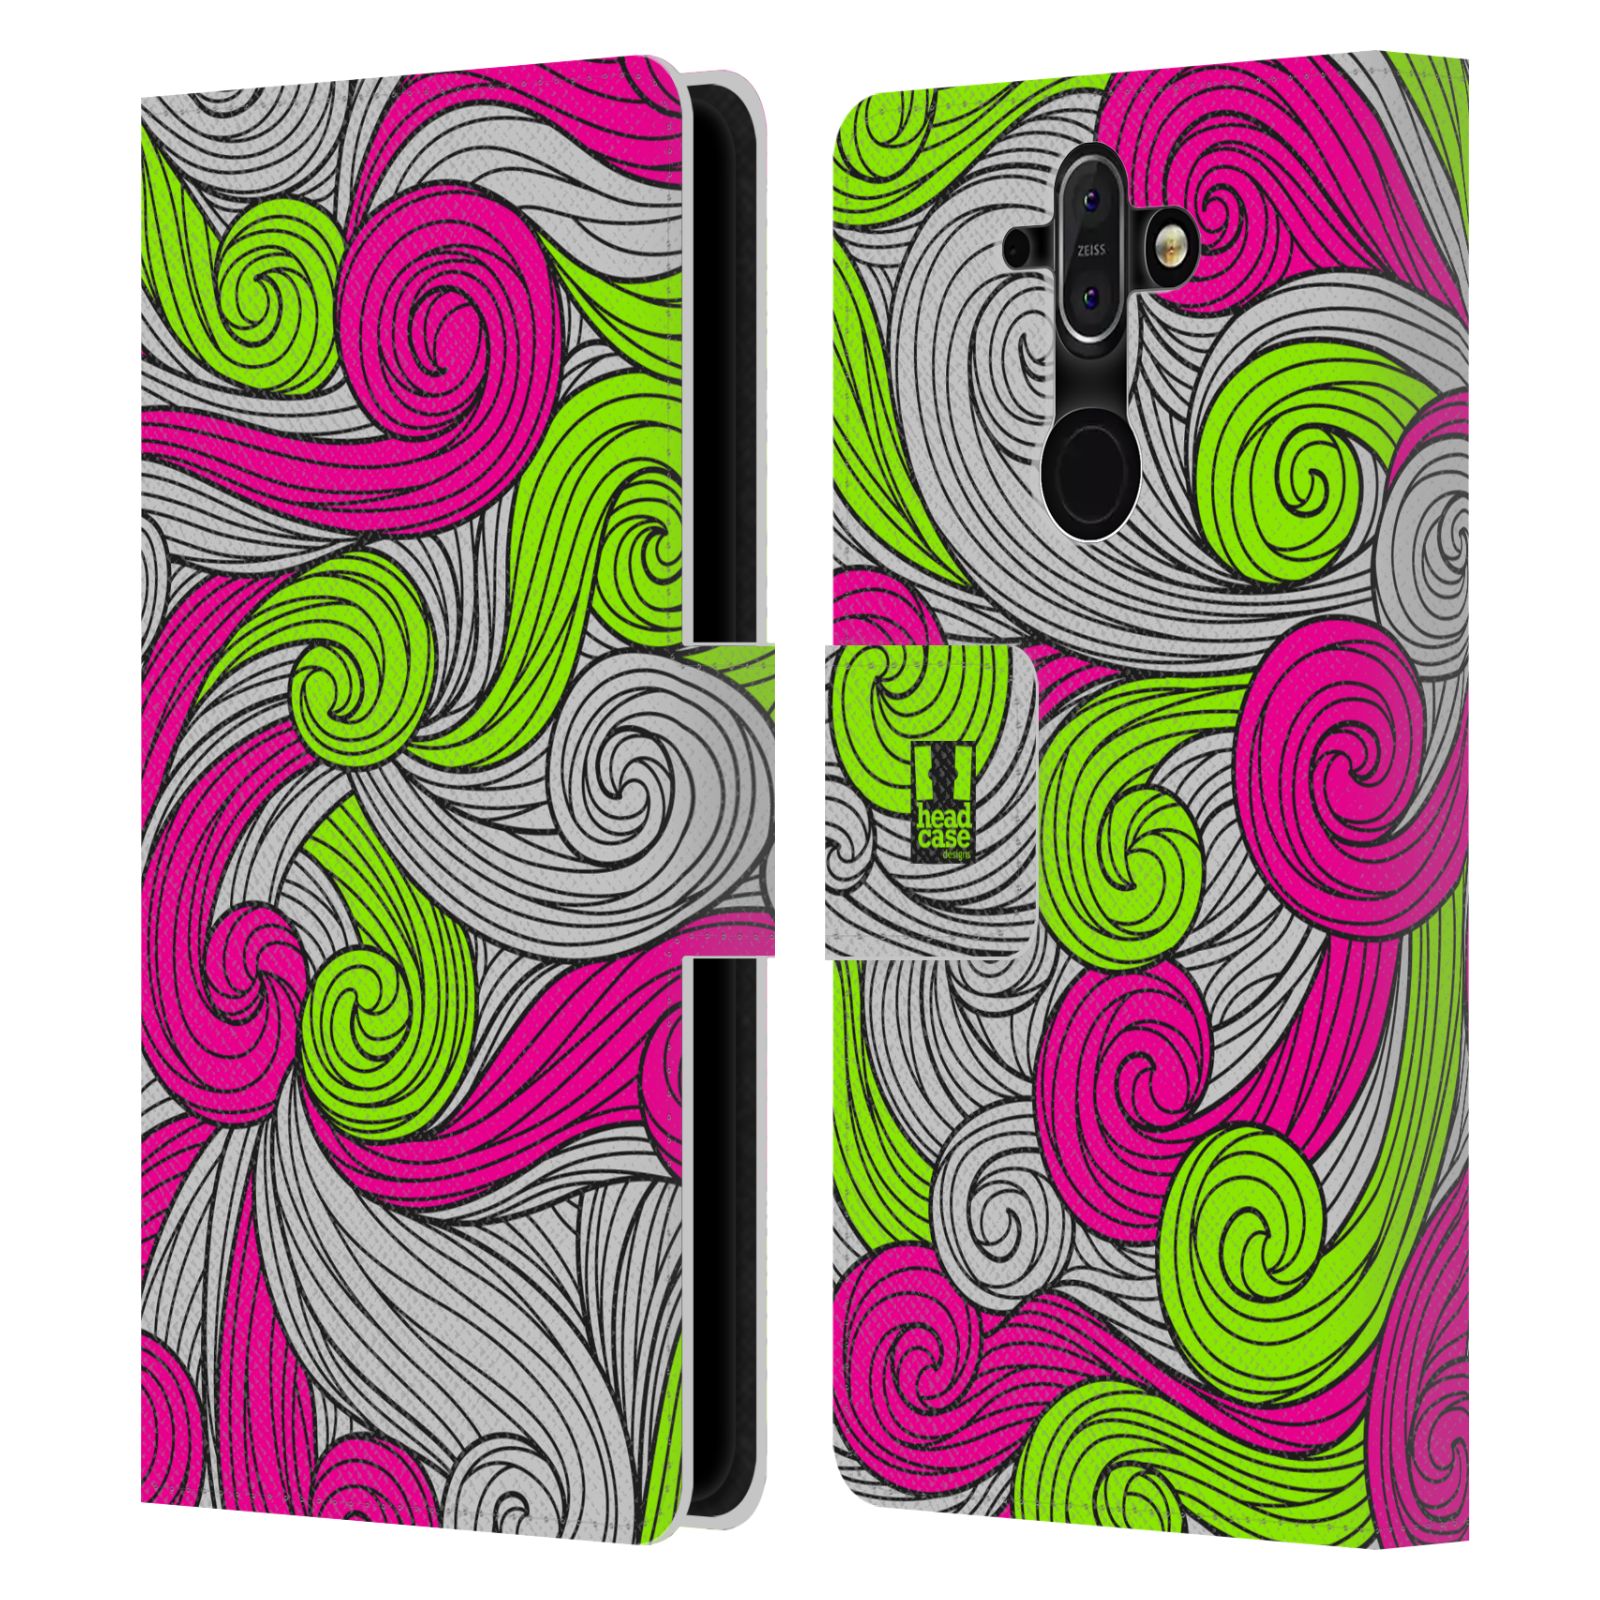 HEAD CASE Flipové pouzdro pro mobil Nokia 8 SIROCCO barevné vlny zářivě růžová a zelená